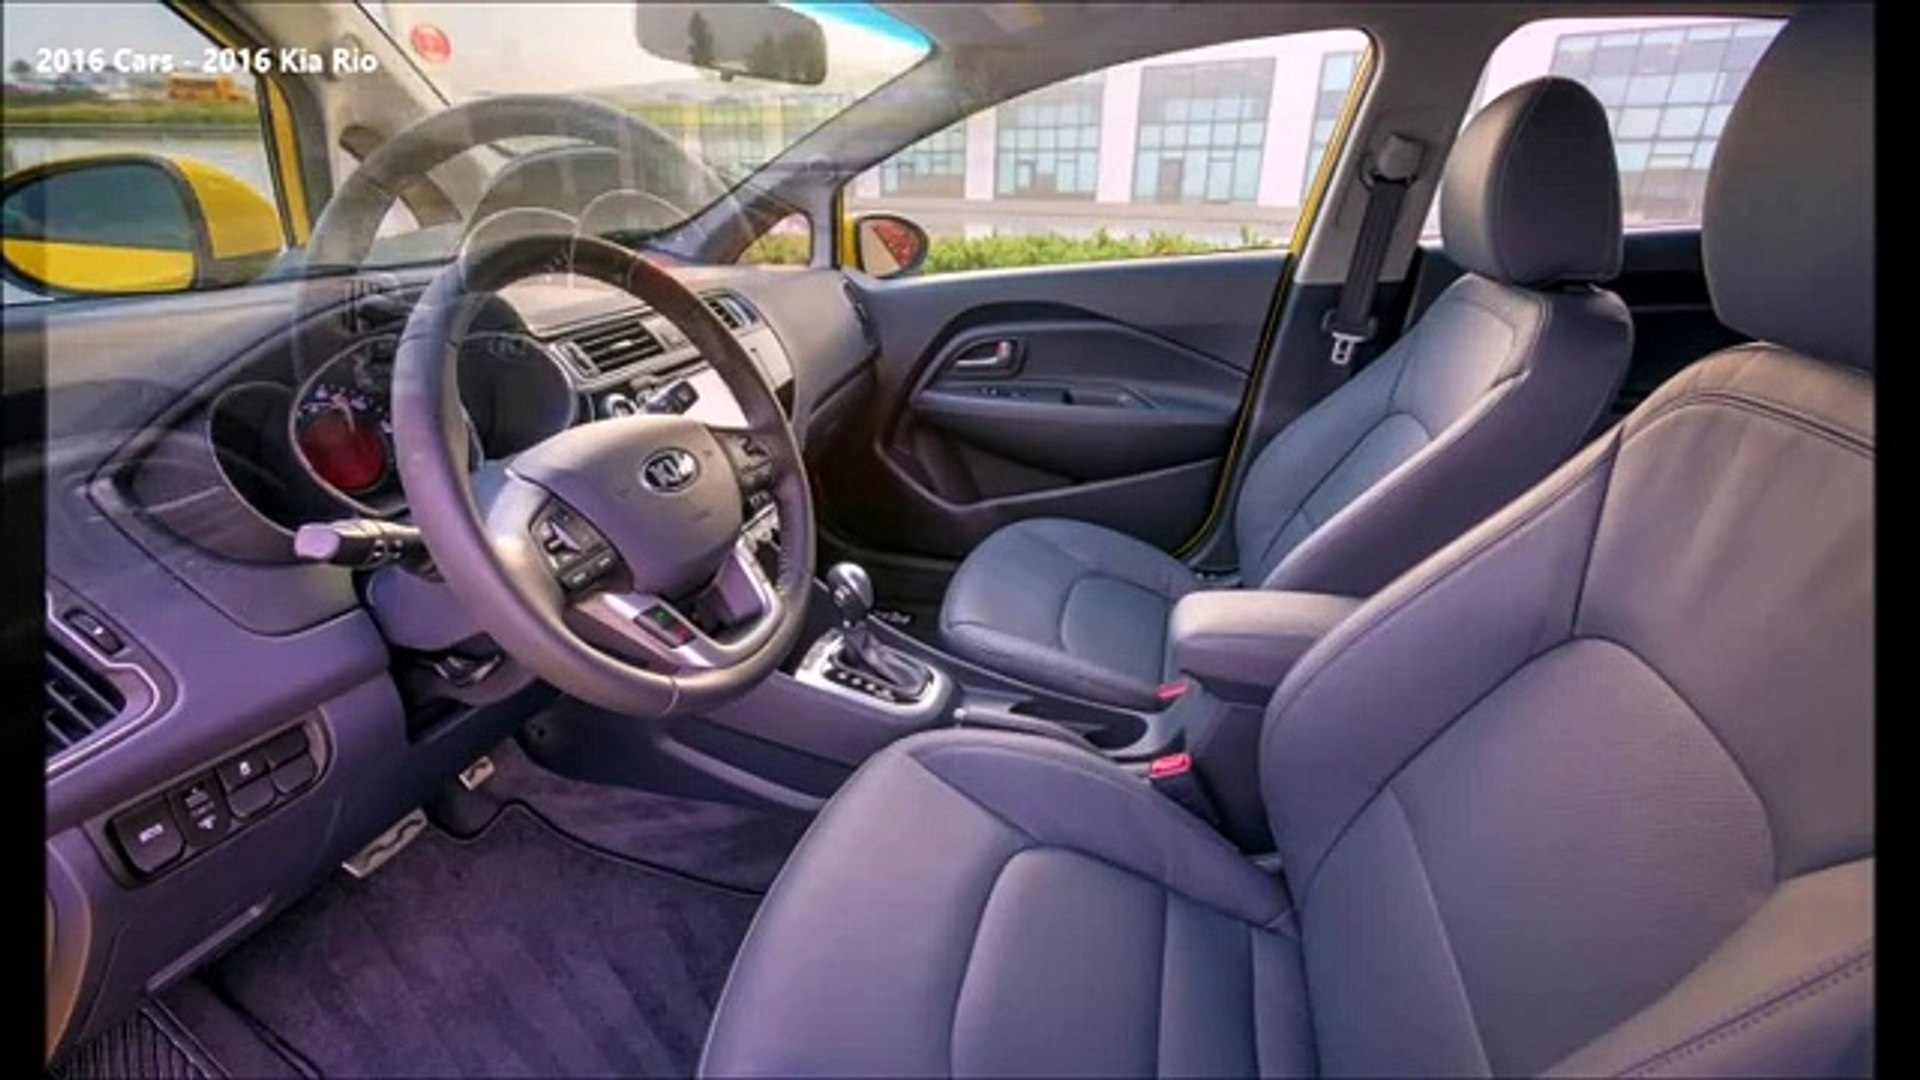 2016 Cars - 2016 Kia Rio Interior Exterior - video Dailymotion